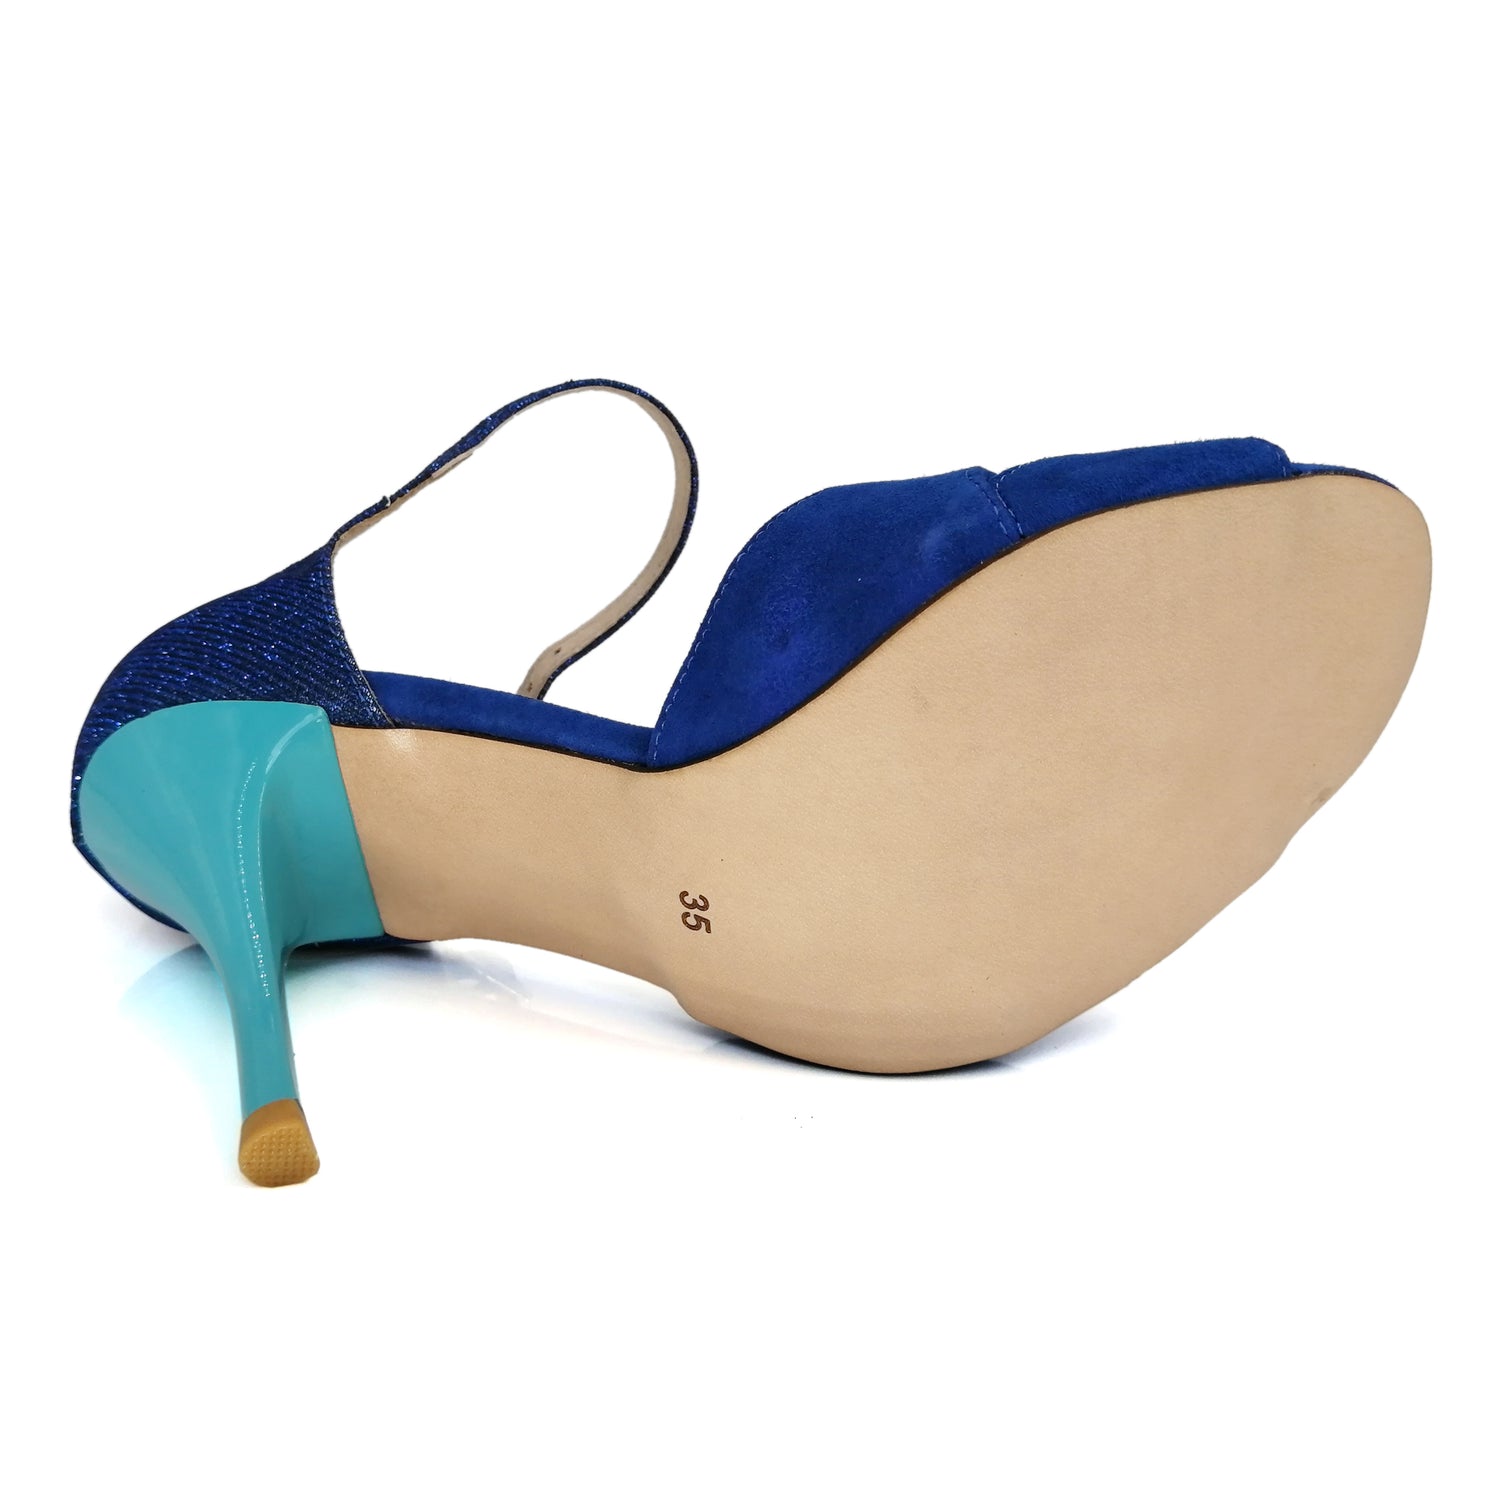 Pro Dancer Women's Argentine Tango Shoes High Heel Dance Sandals Leather Sole Blue PD9039A5